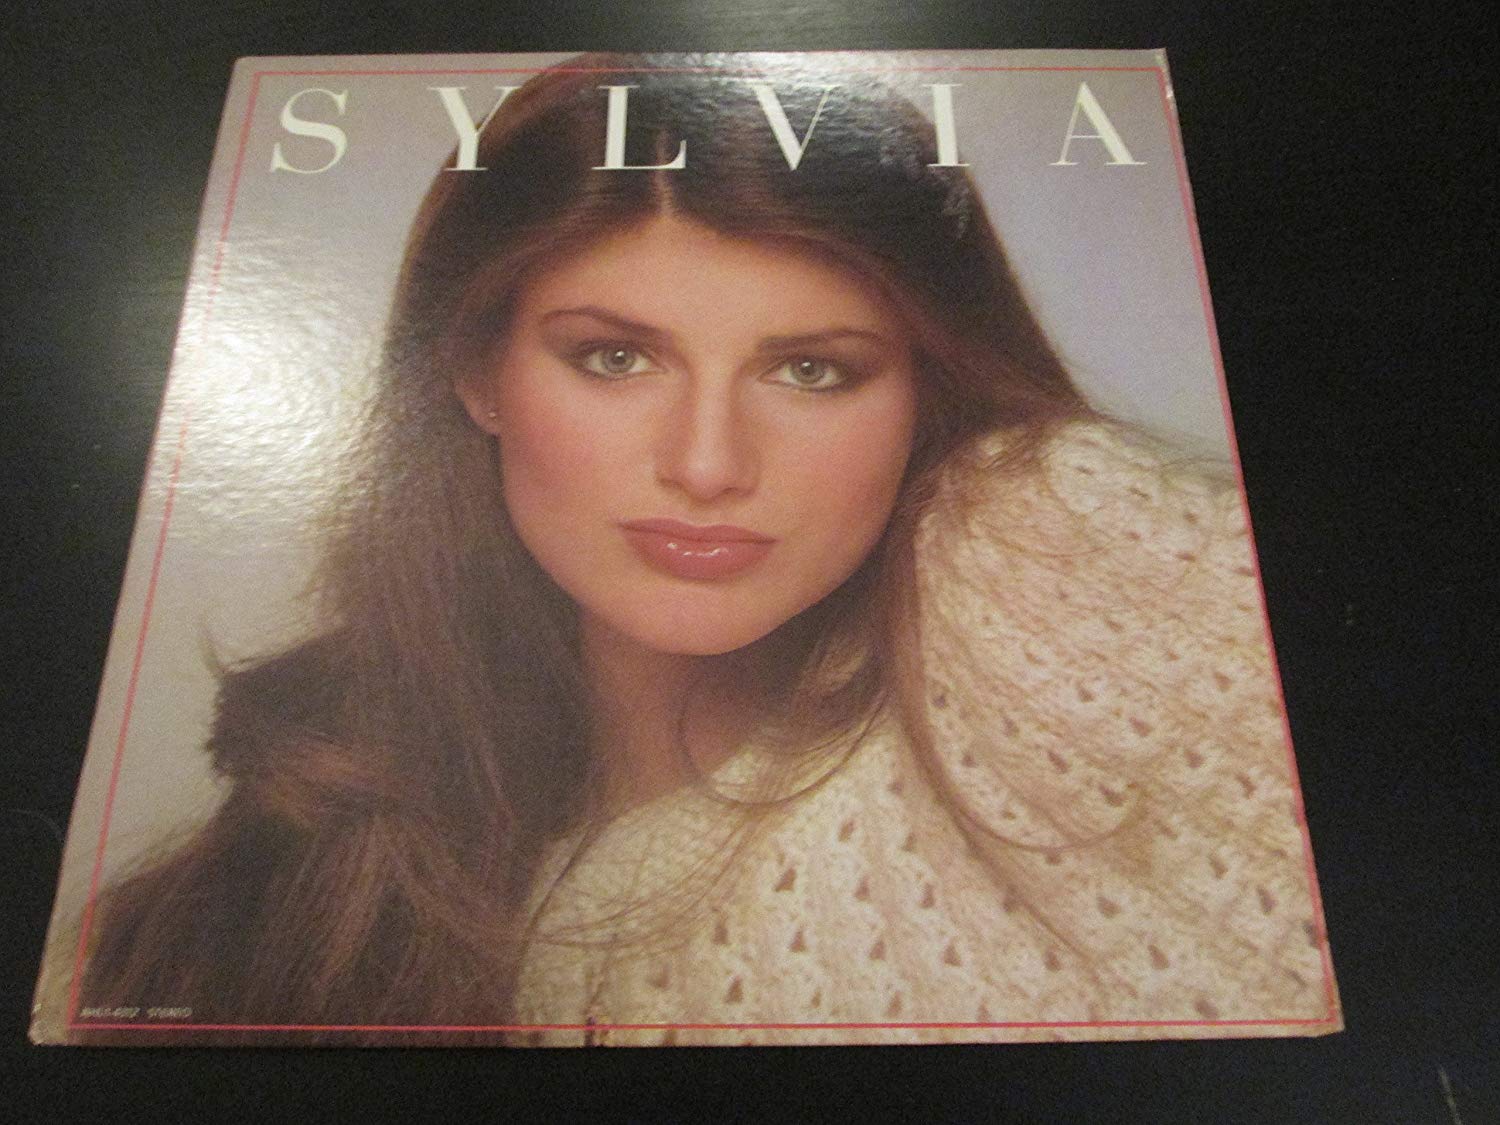 A photo of the album Sylvia at Vinyl Record Memories.